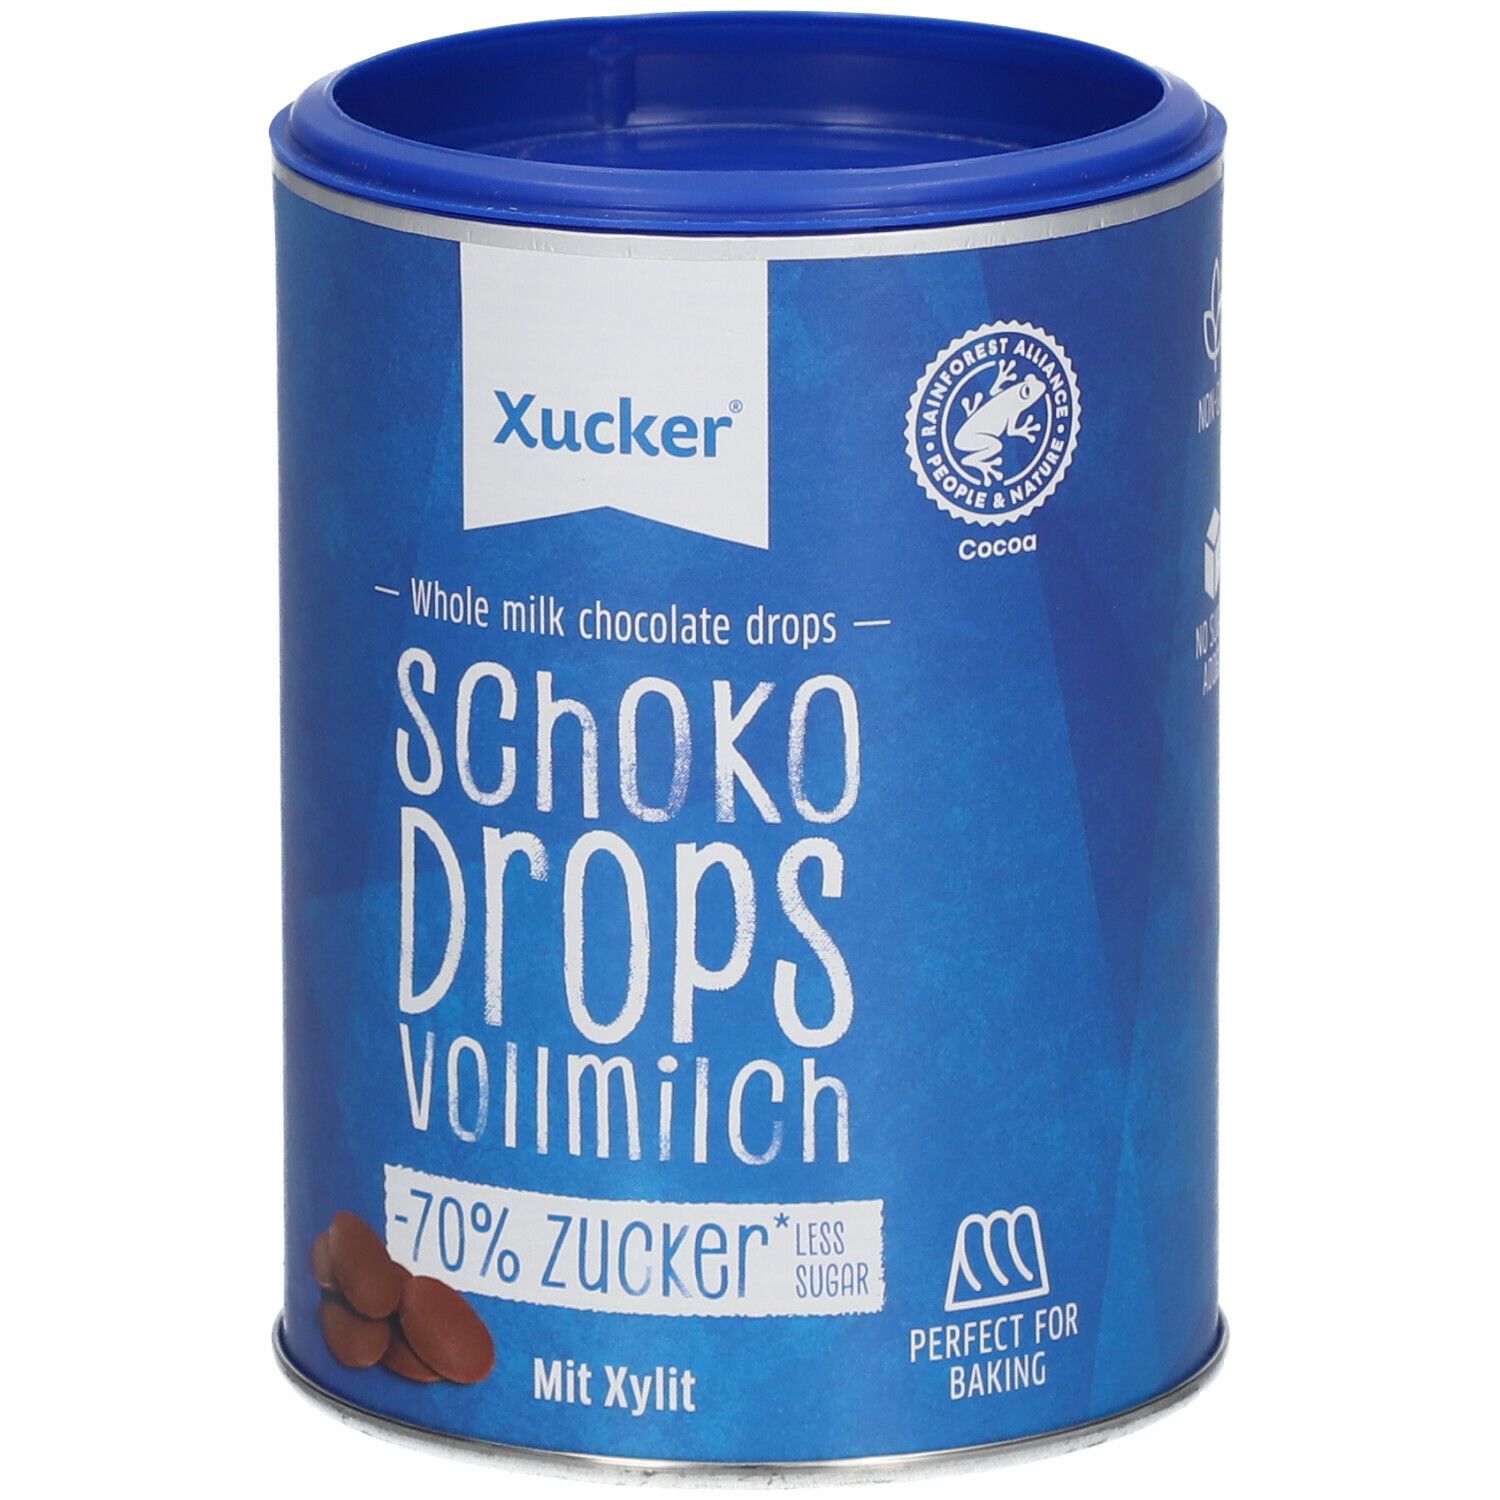 Xucker® Schoko Drops VOLLMILCH